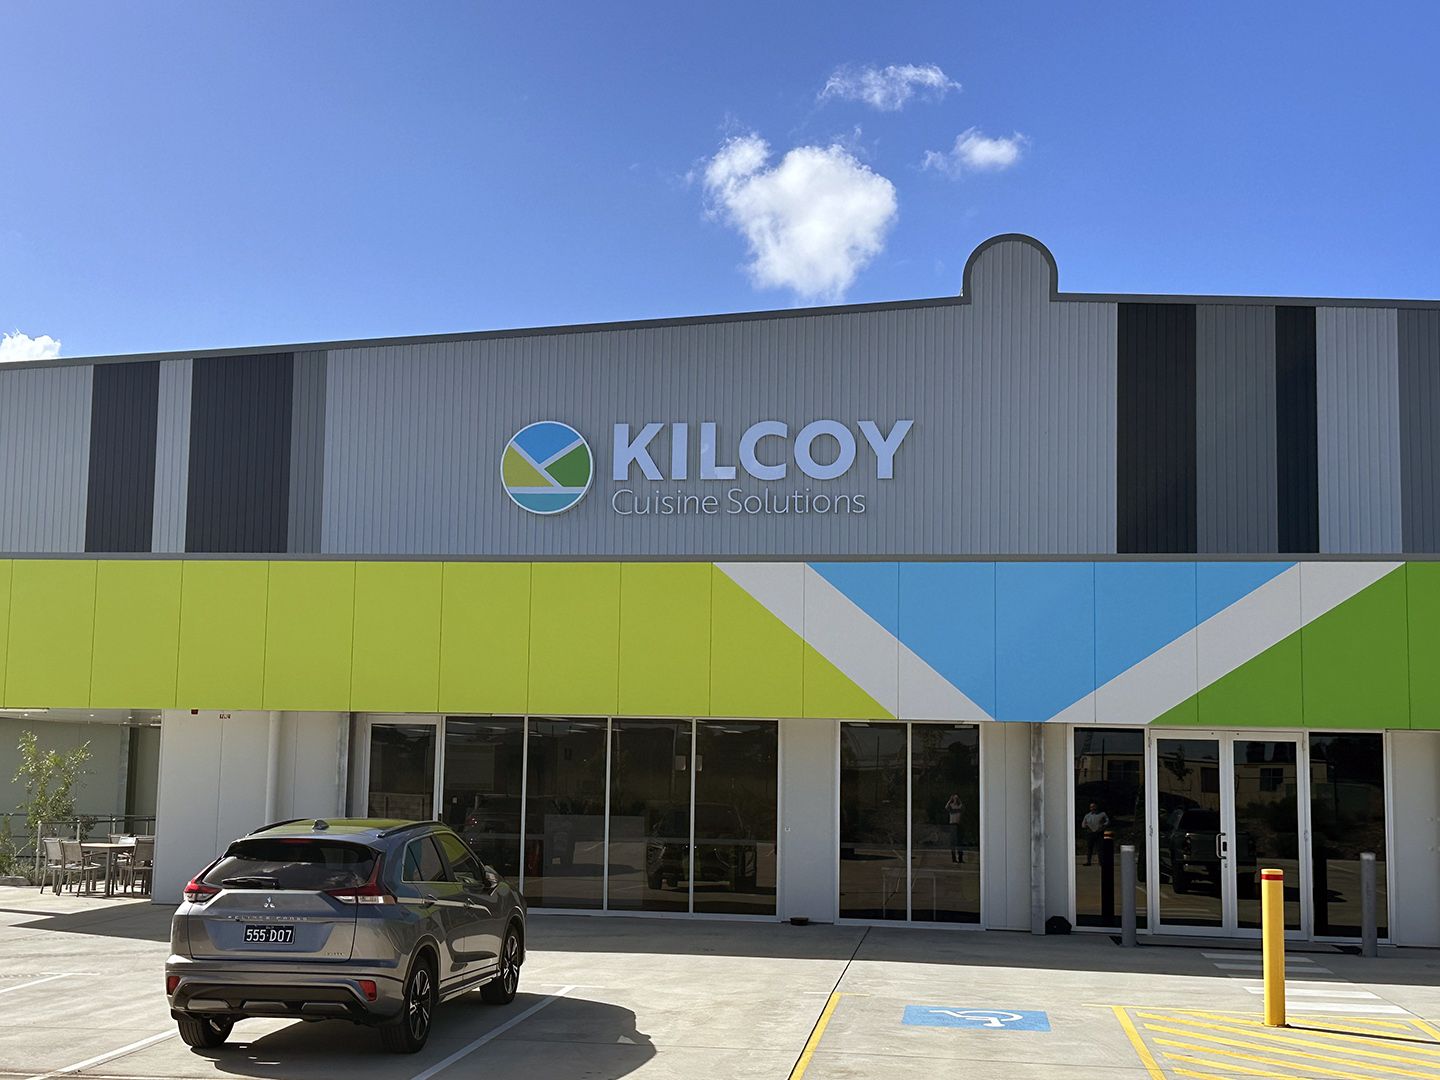 Kilcoy Building Signage